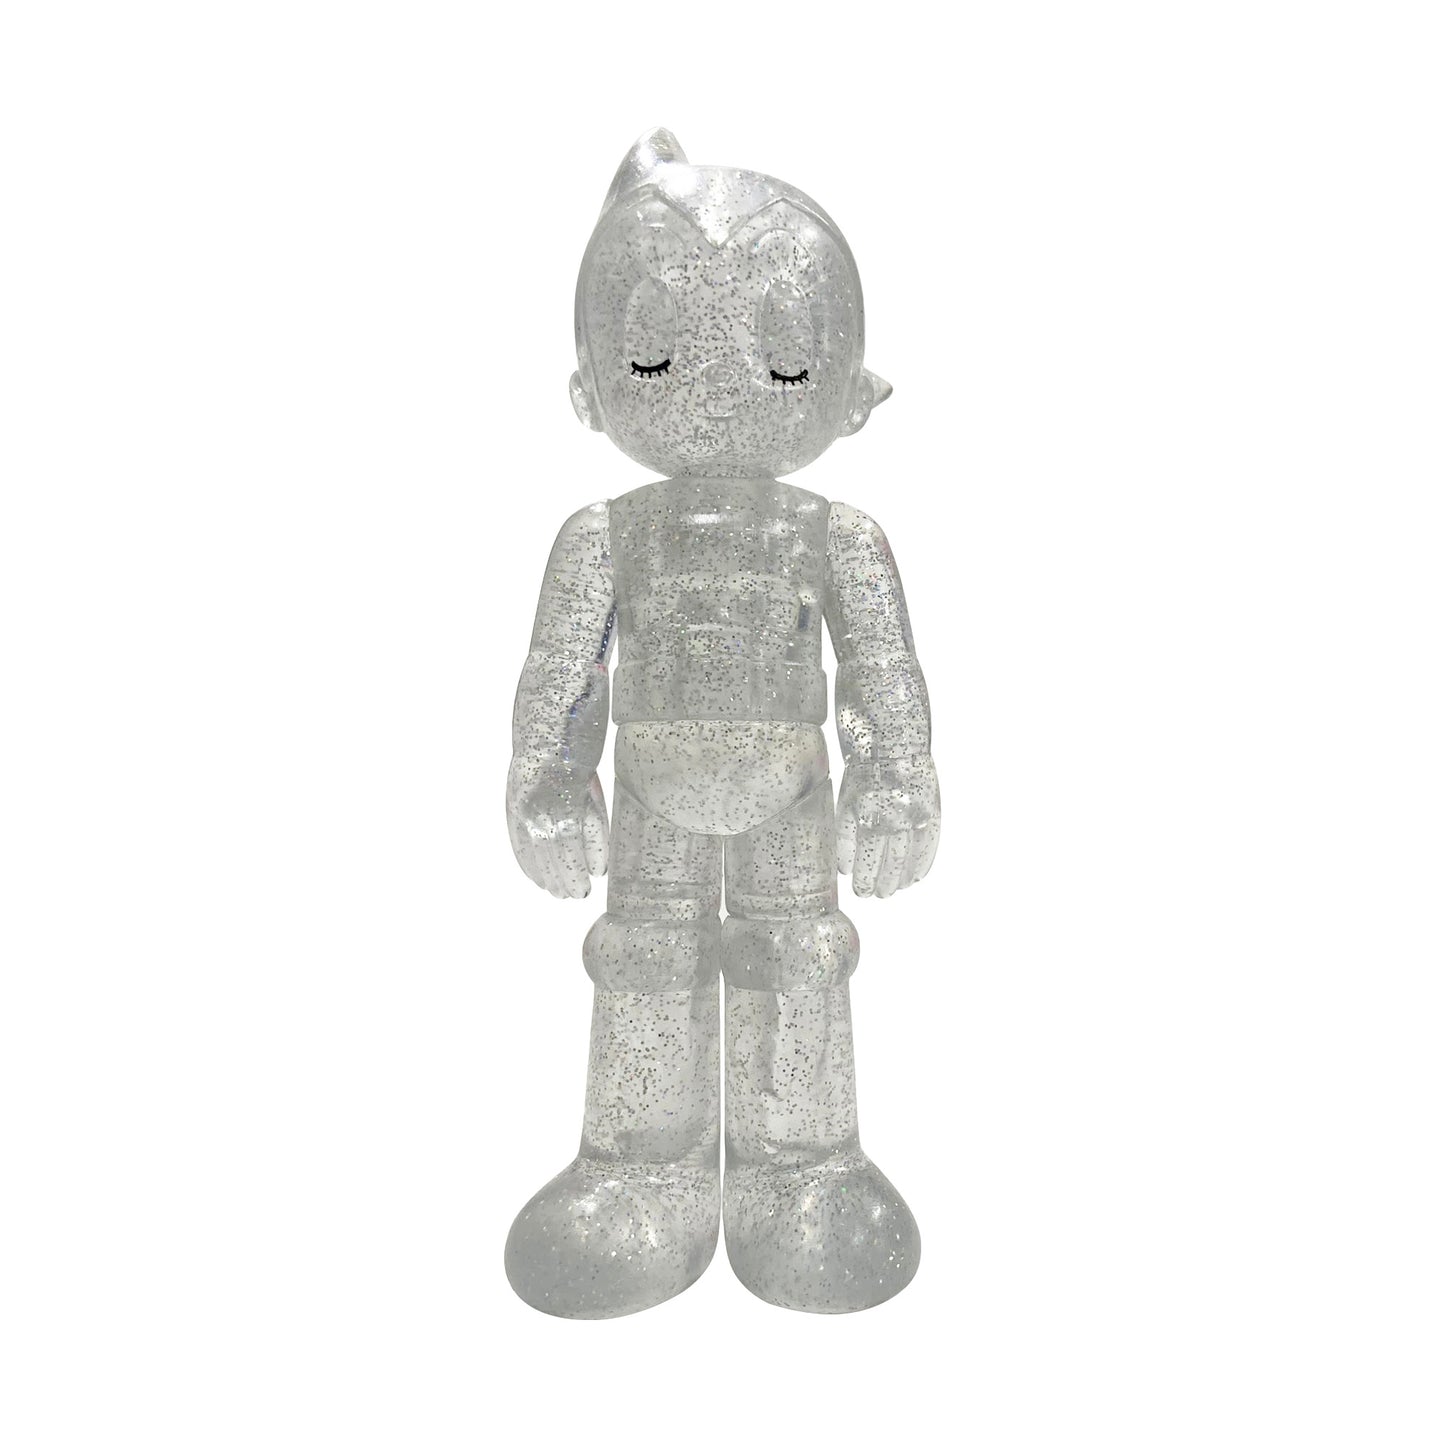 ToyQube x Tezuka Productions - Astro Boy Soda White (Closed Eyes) 5.35" Tall Figure